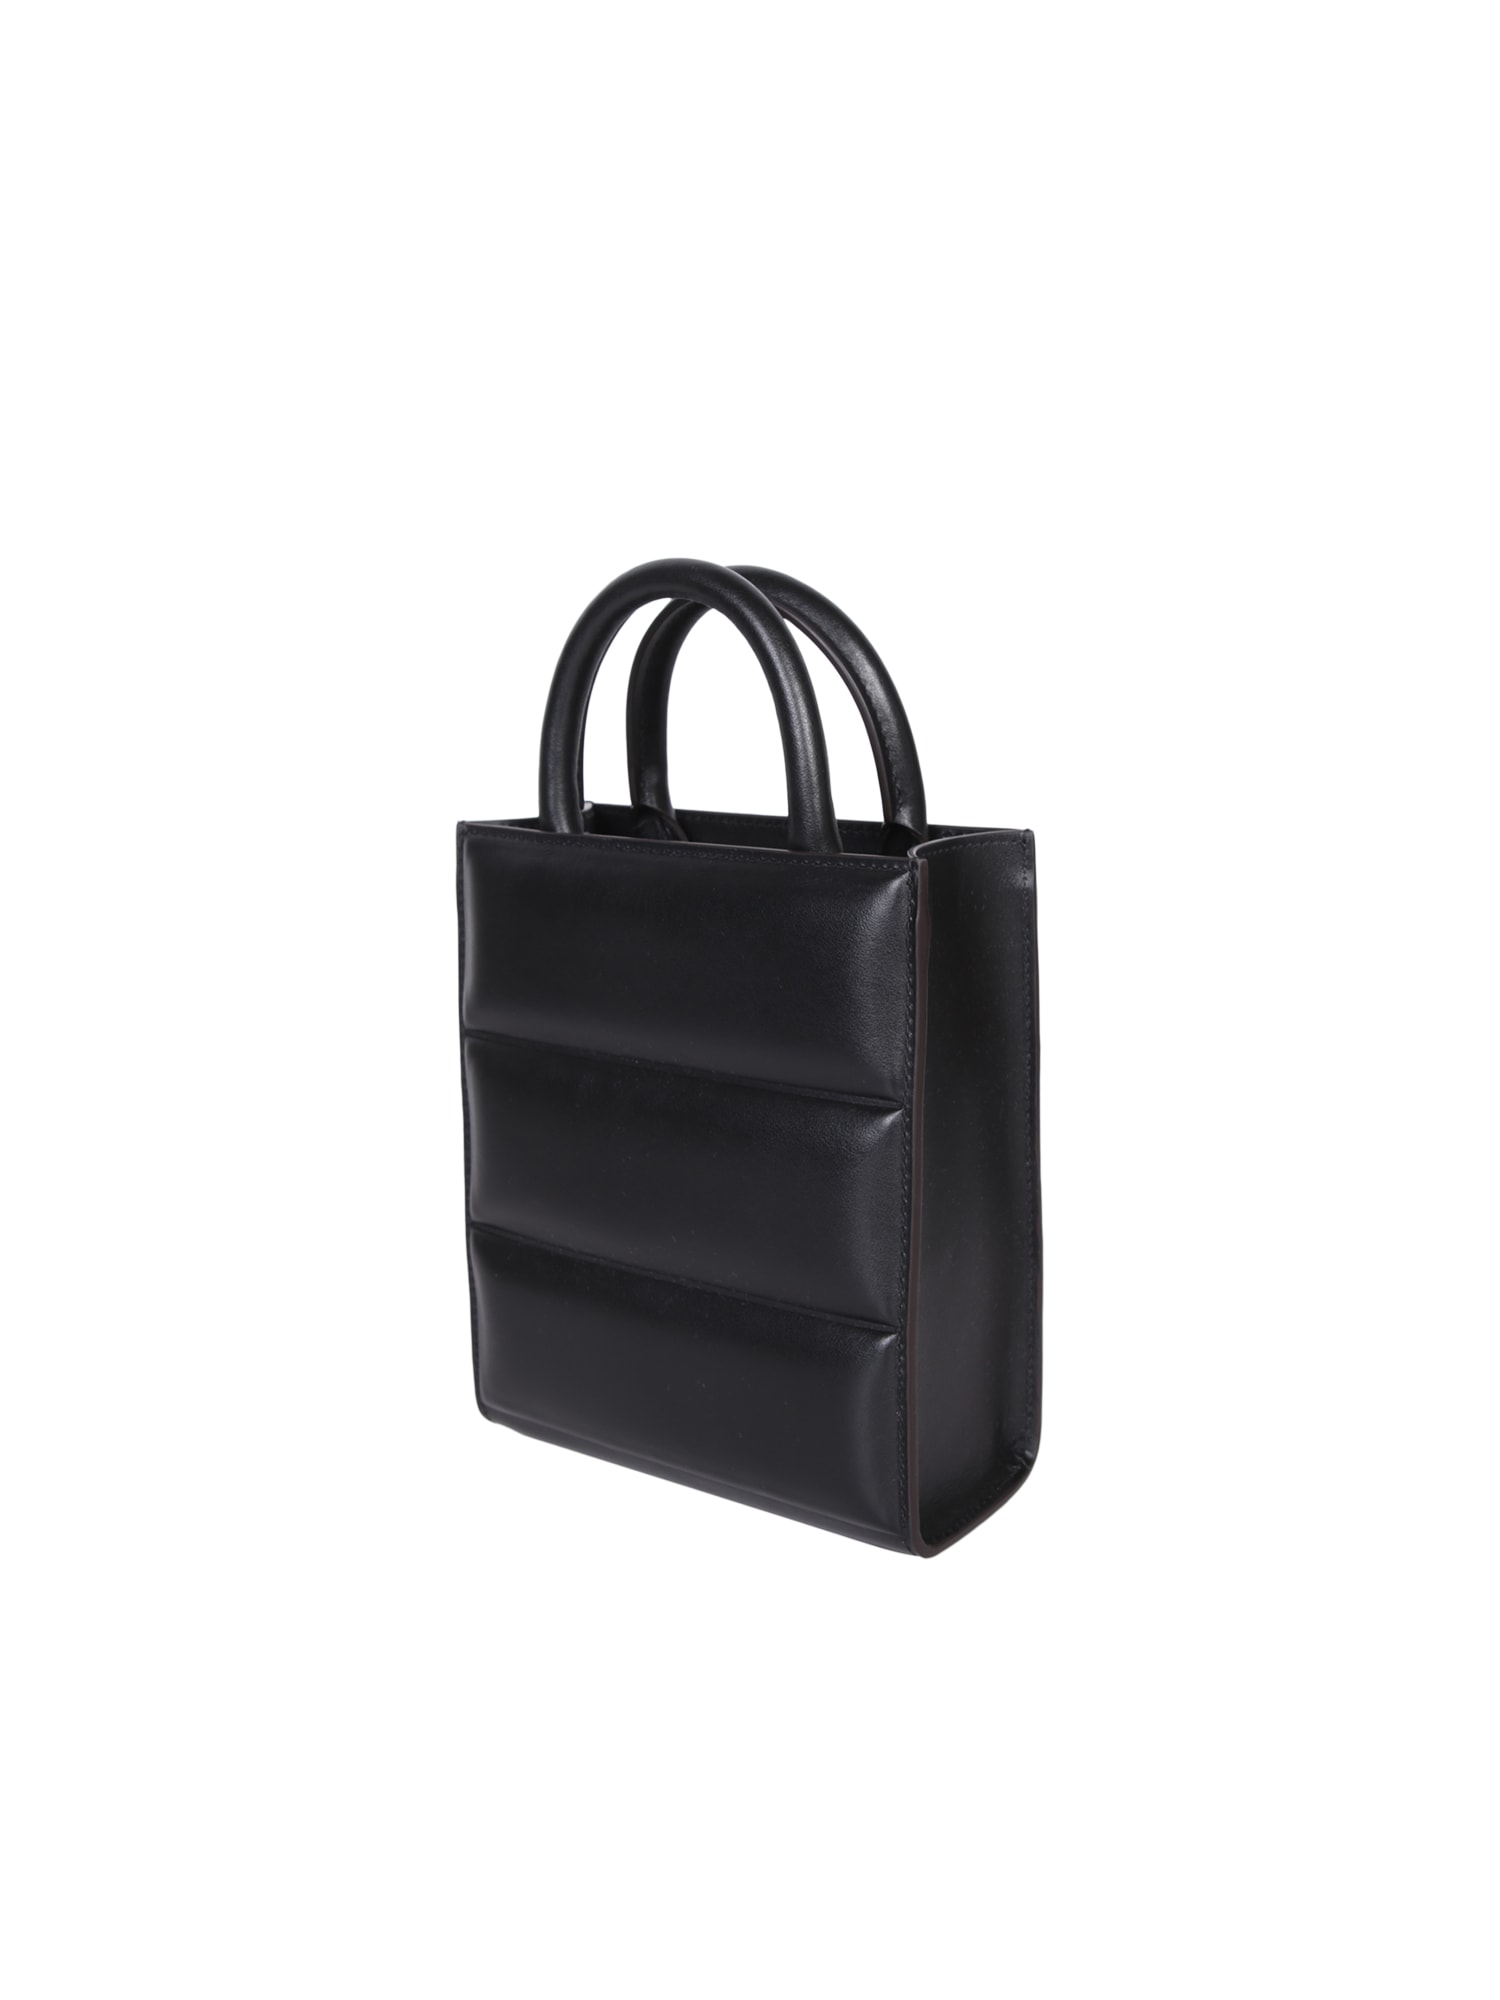 Shop Moncler Doudoune Black Mini Tote Bag